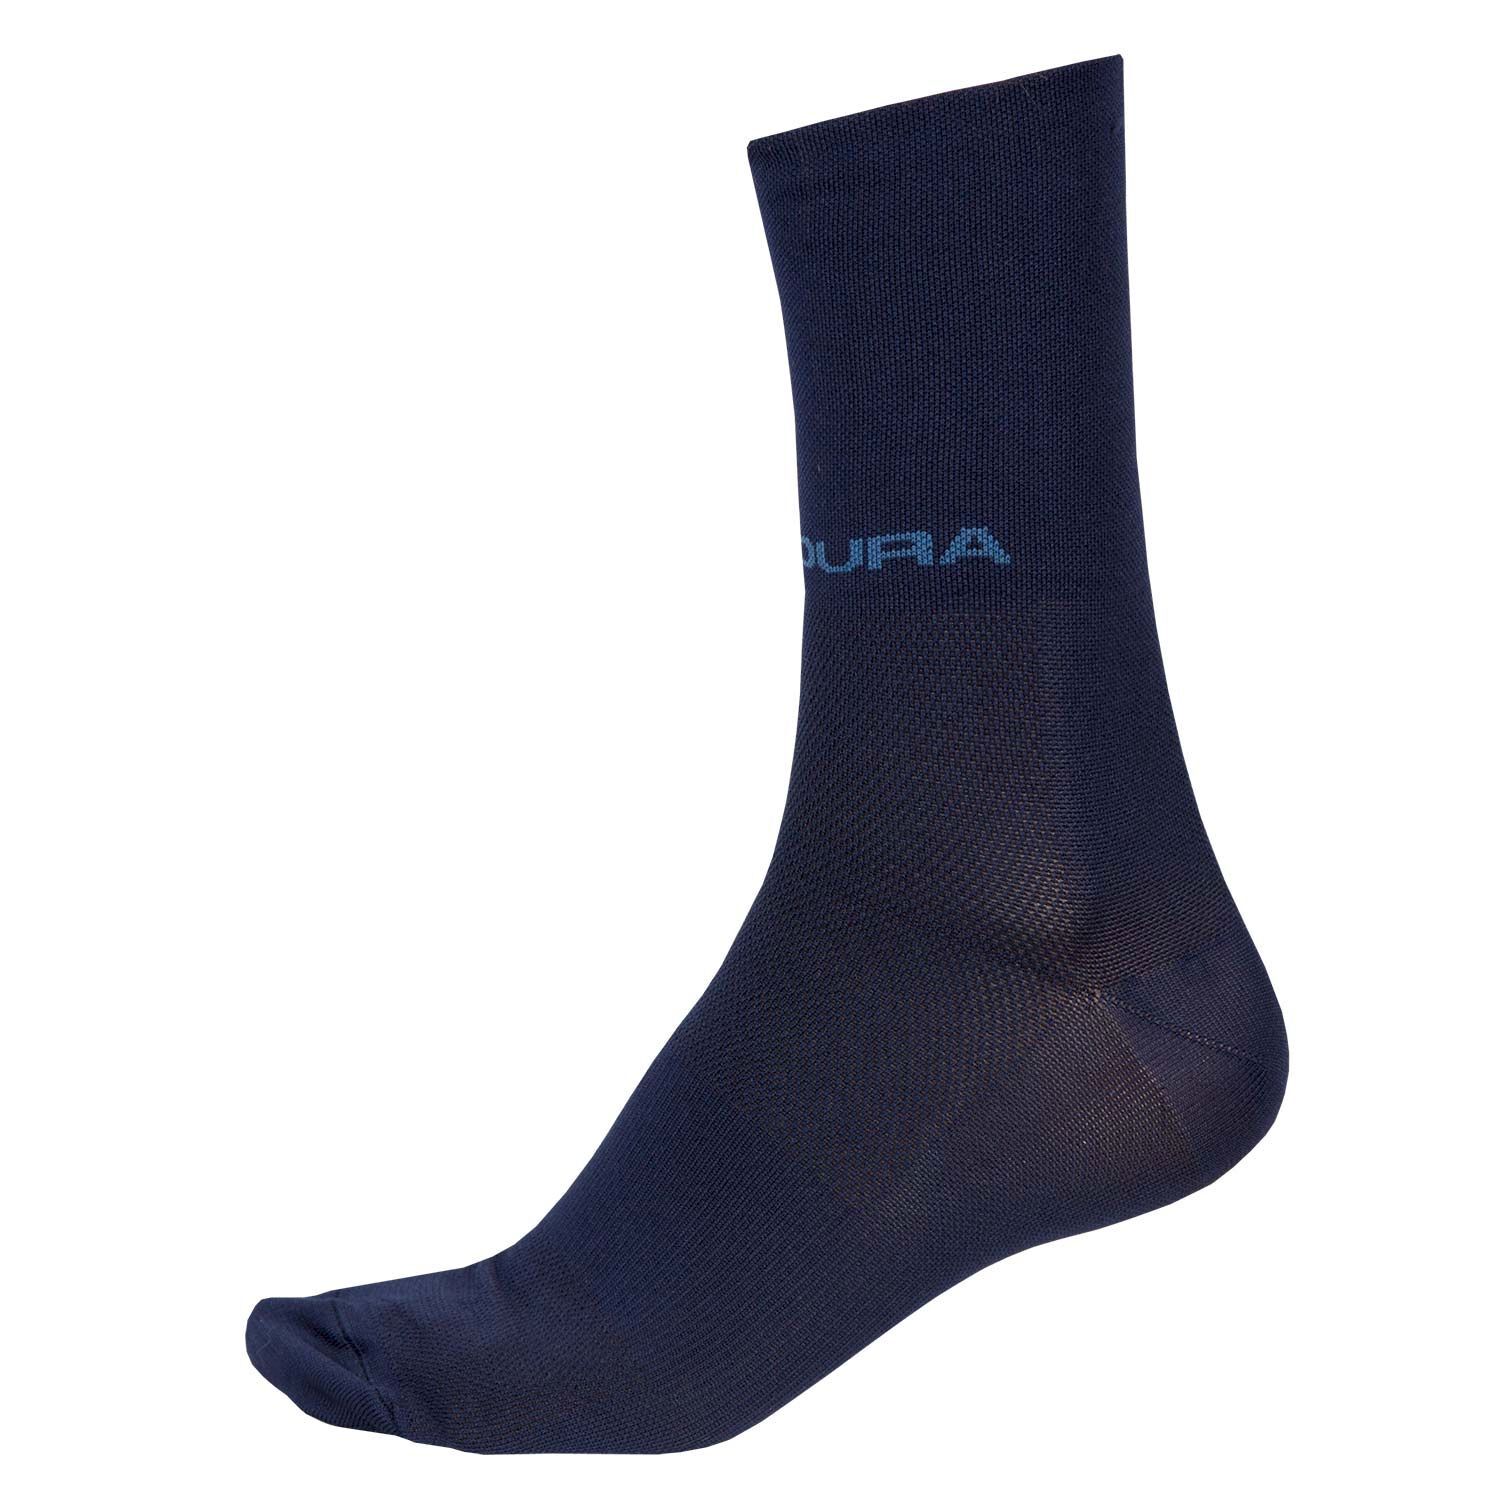 Endura Pro SL Sock II - Cycling socks - Men's